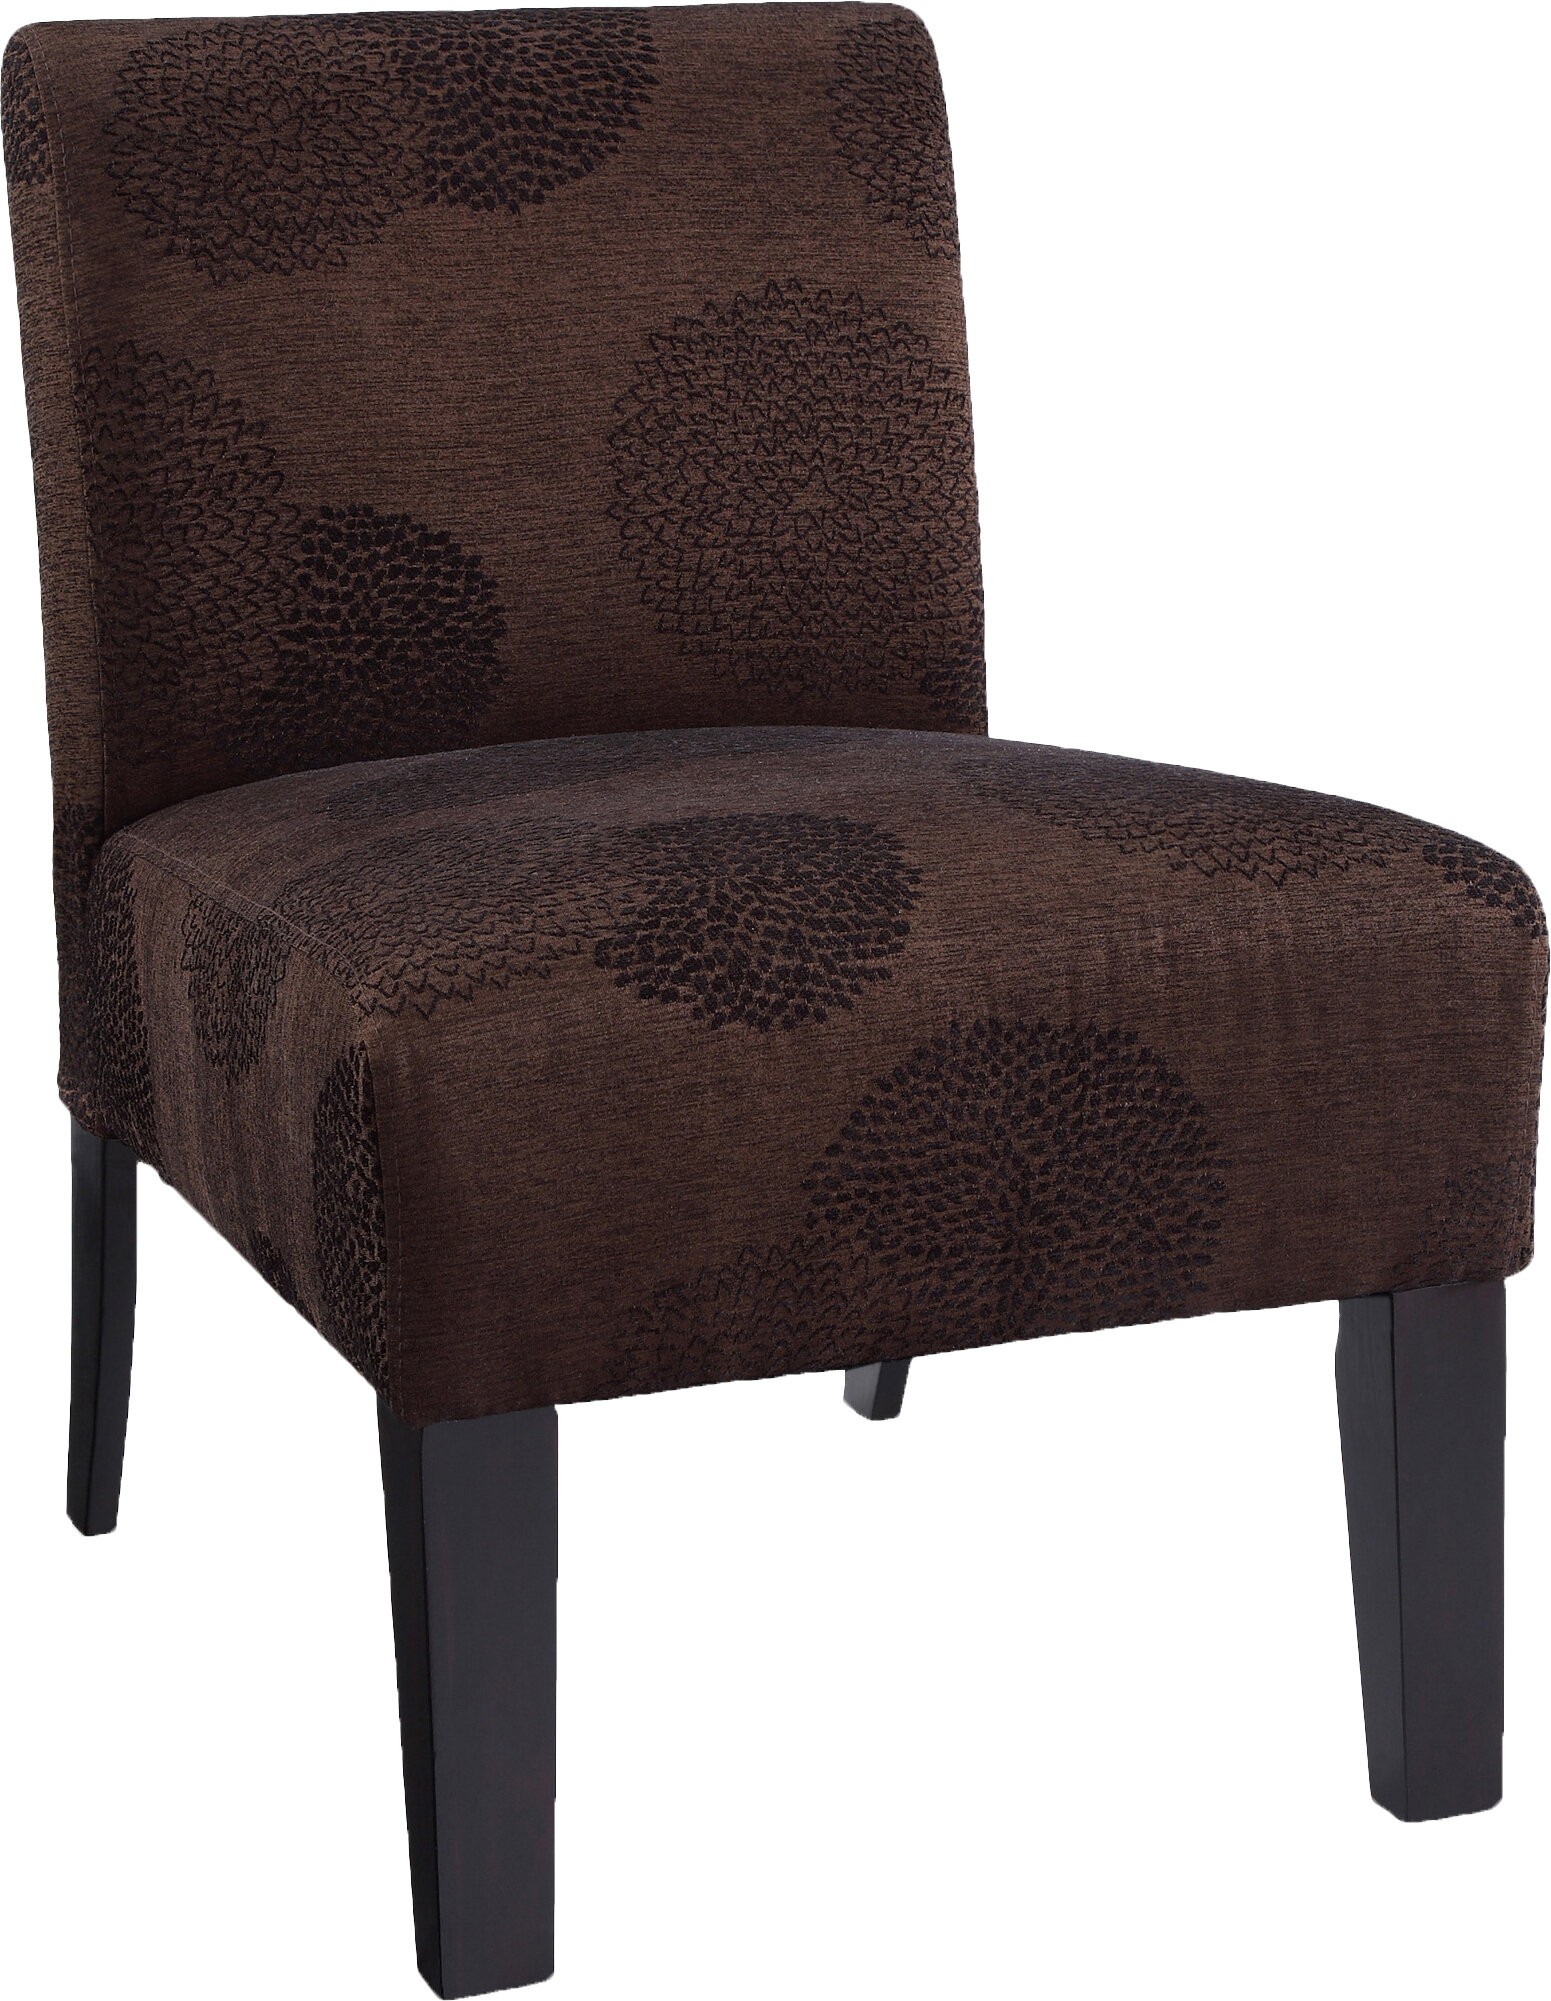 Deco Sunflower Slipper Chair